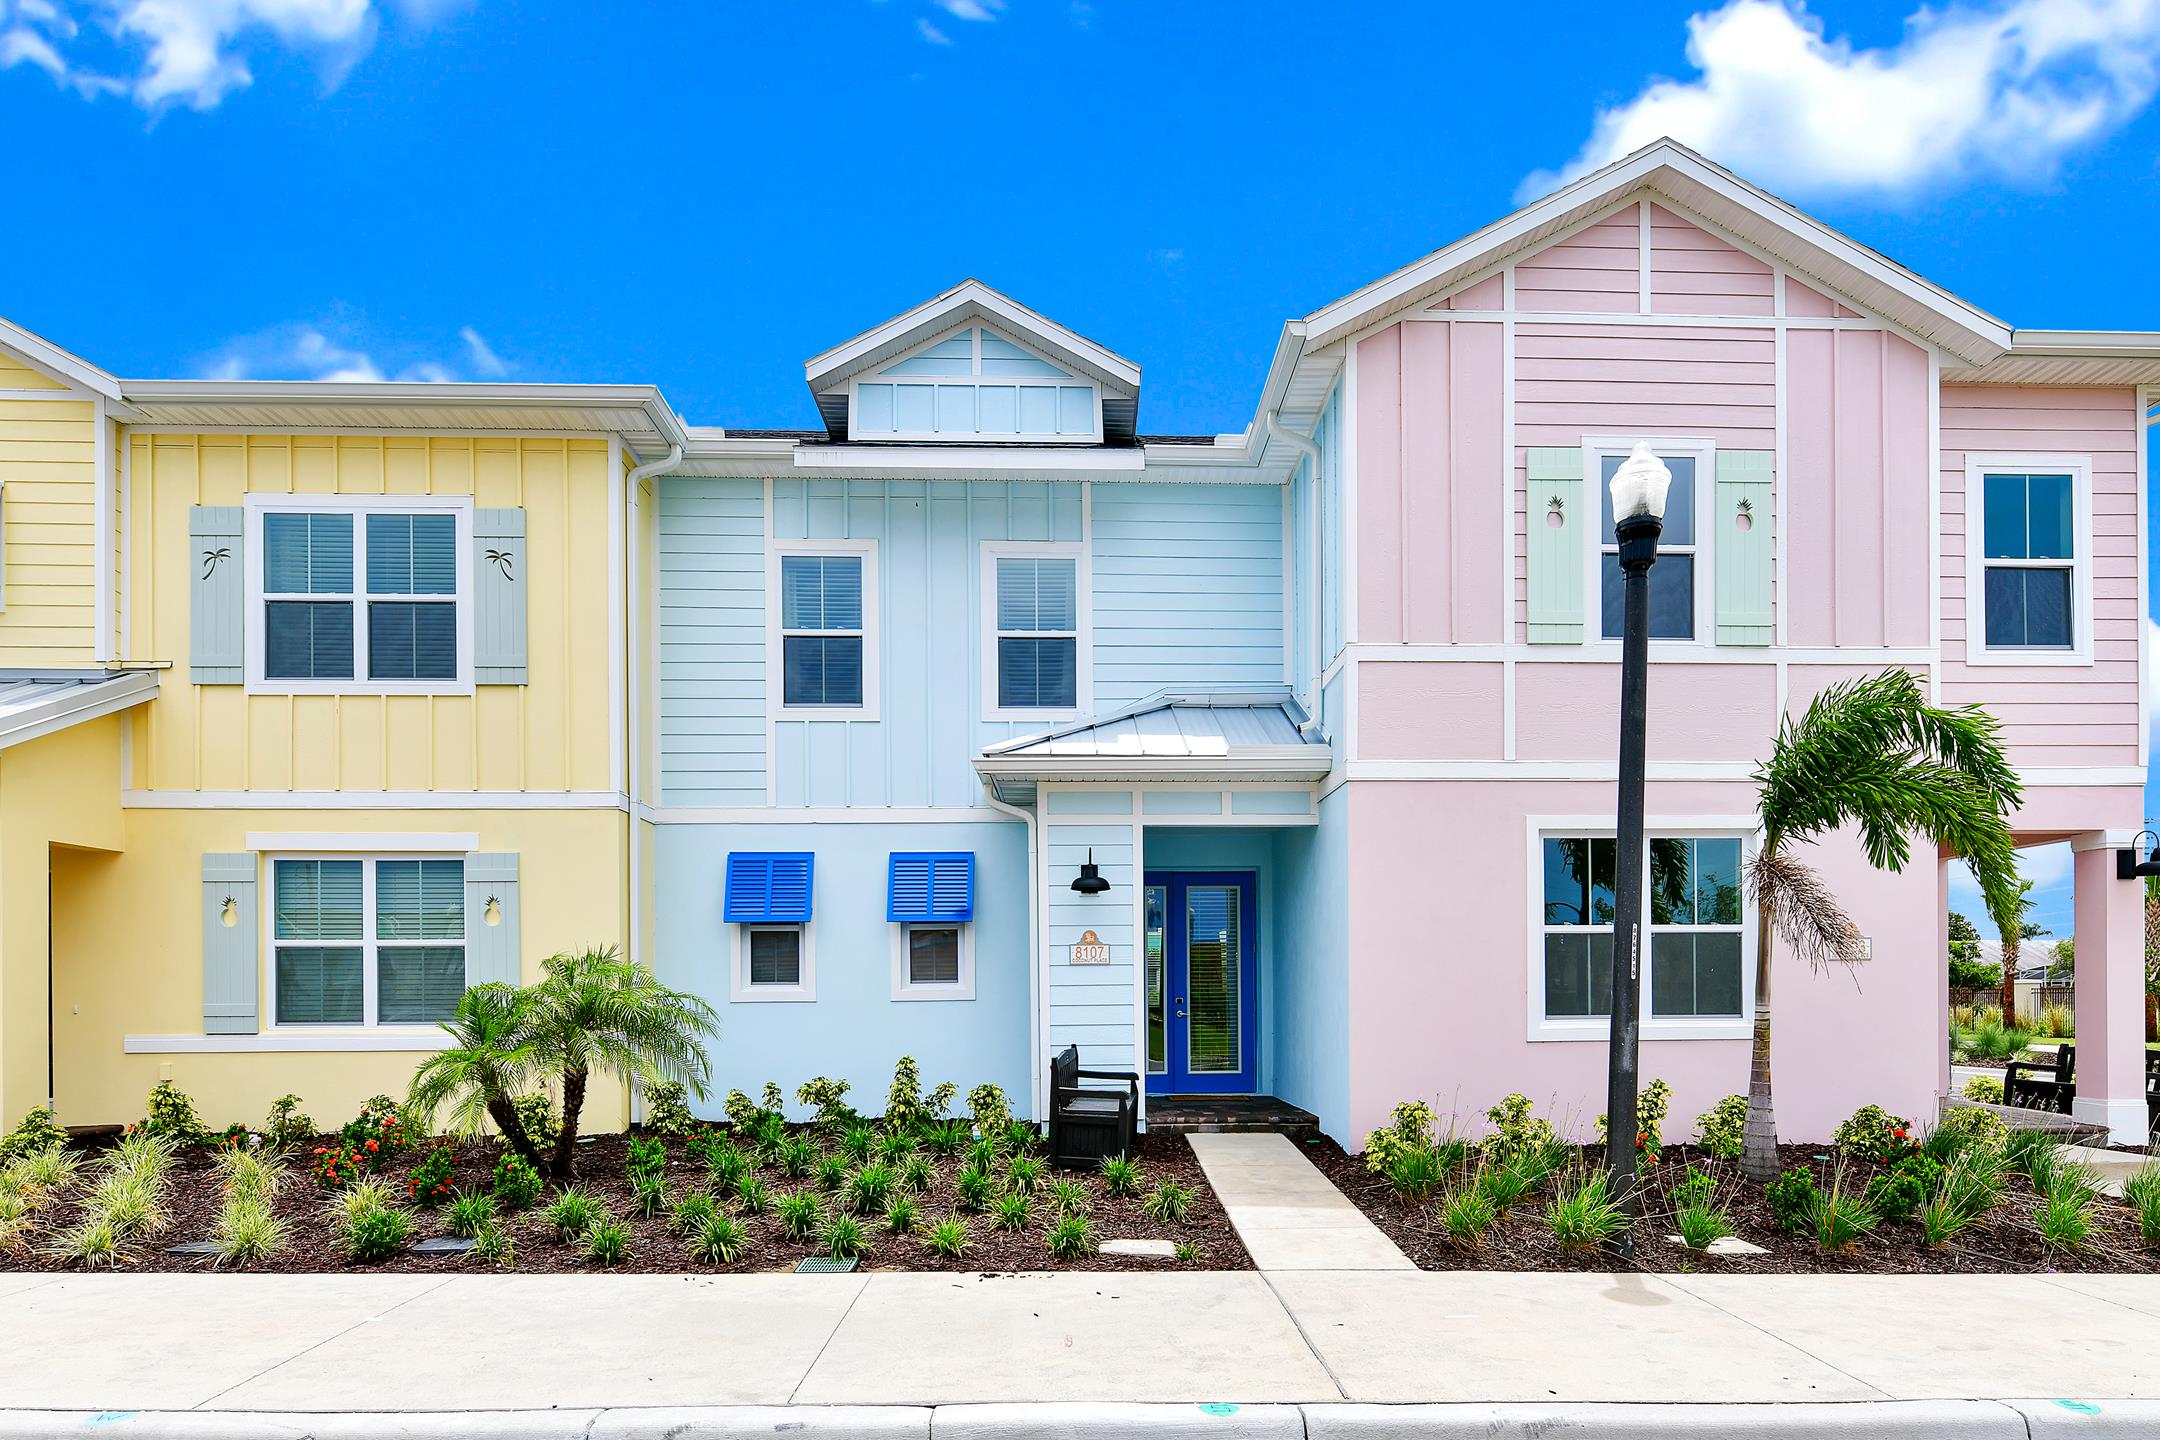 Property Image 1 - Sky Blue Villa near Disney with Margaritaville Resort Access - 8107CP